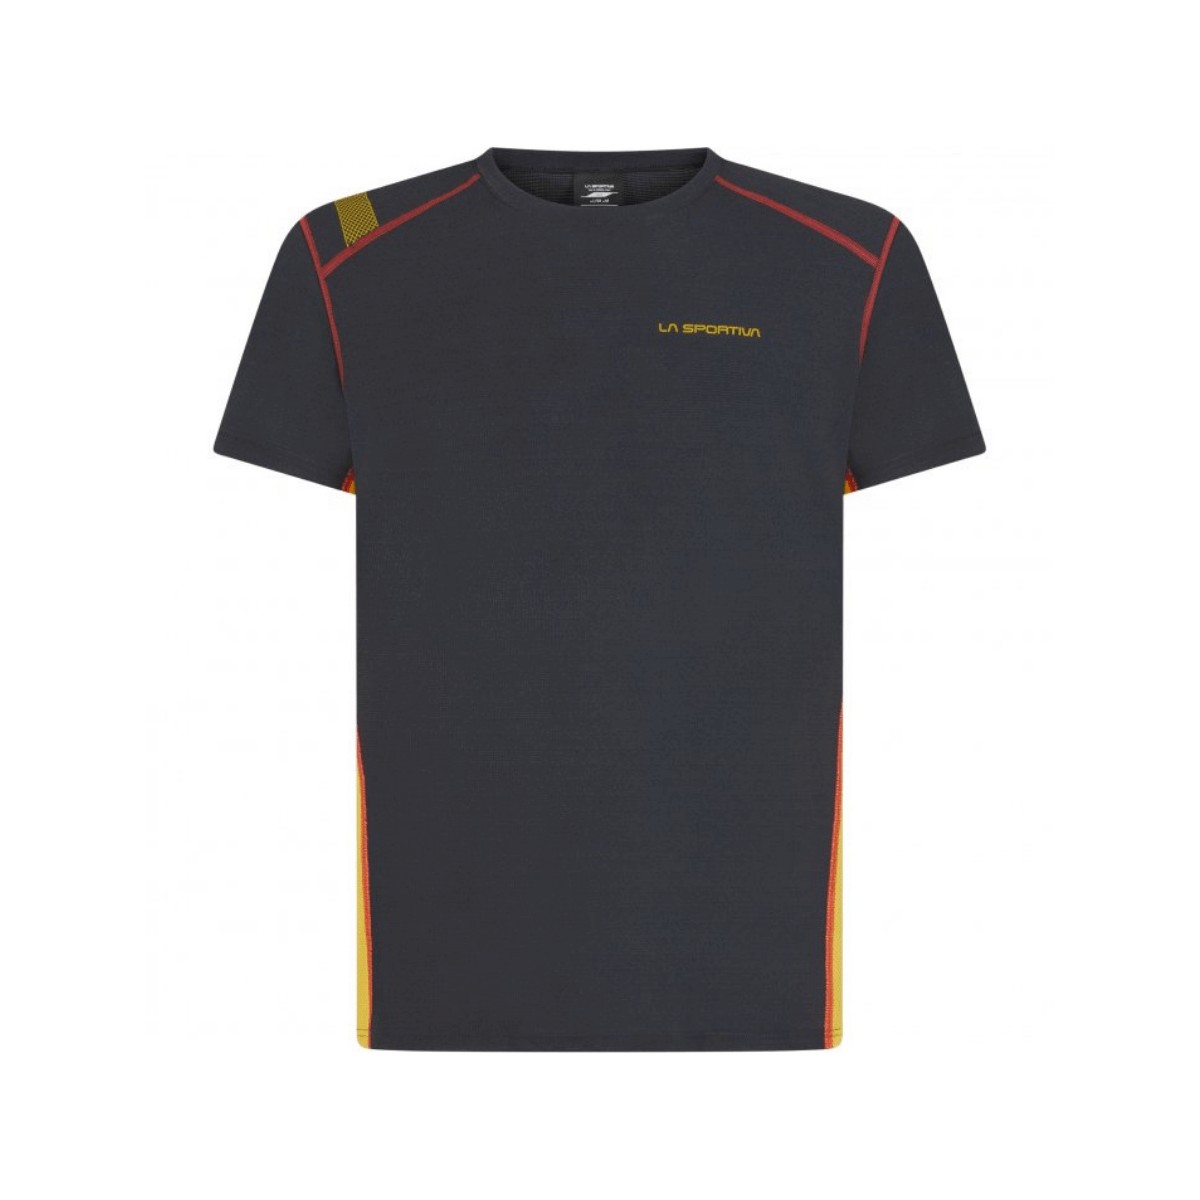 T-Shirt La Sportiva Synth Manches Courtes Jaune Noir, Taille S